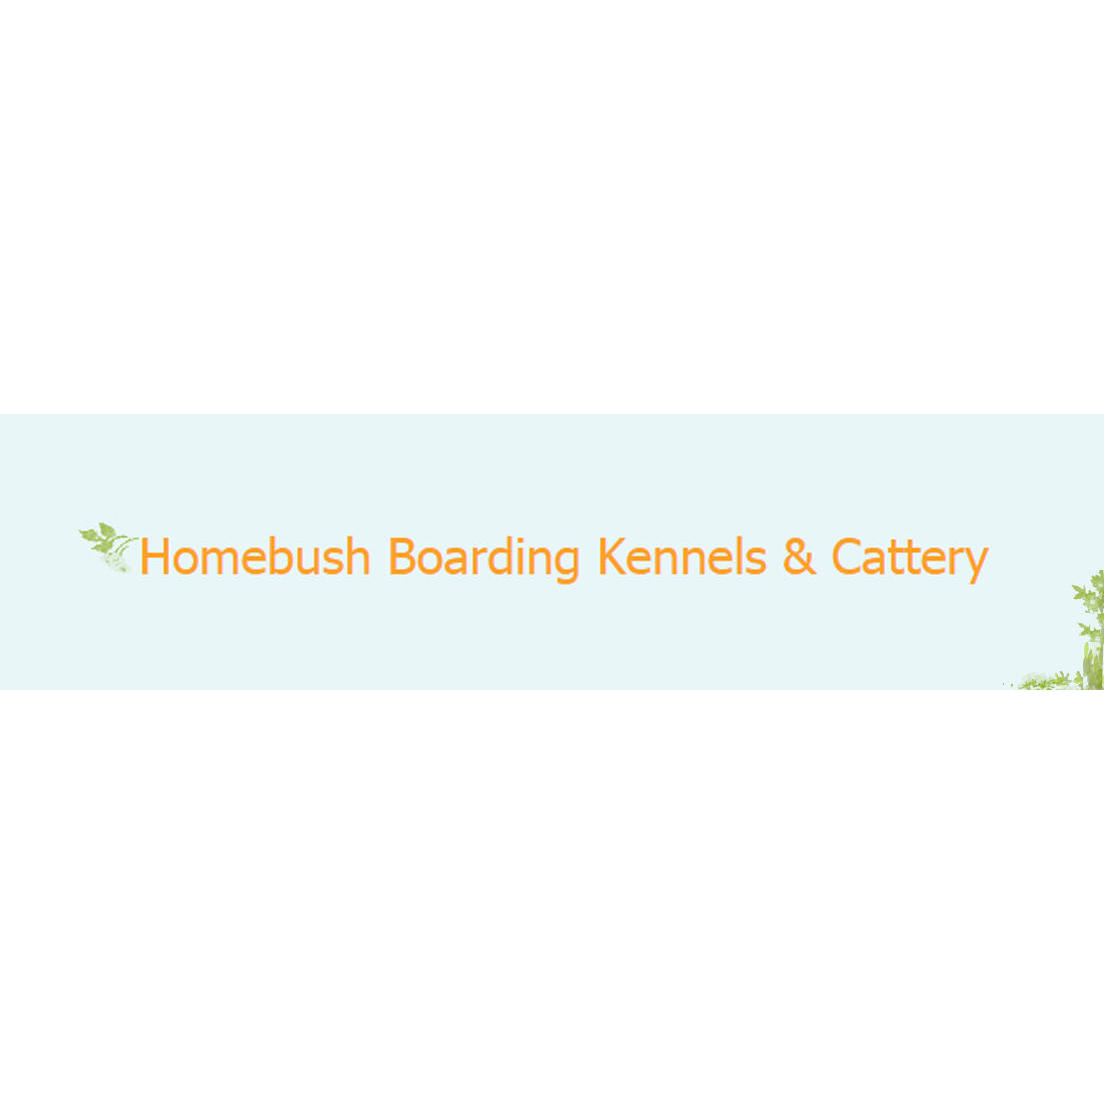 Homebush Boarding Kennels & Cattery - Homebush, QLD 4740 - (07) 4959 7225 | ShowMeLocal.com